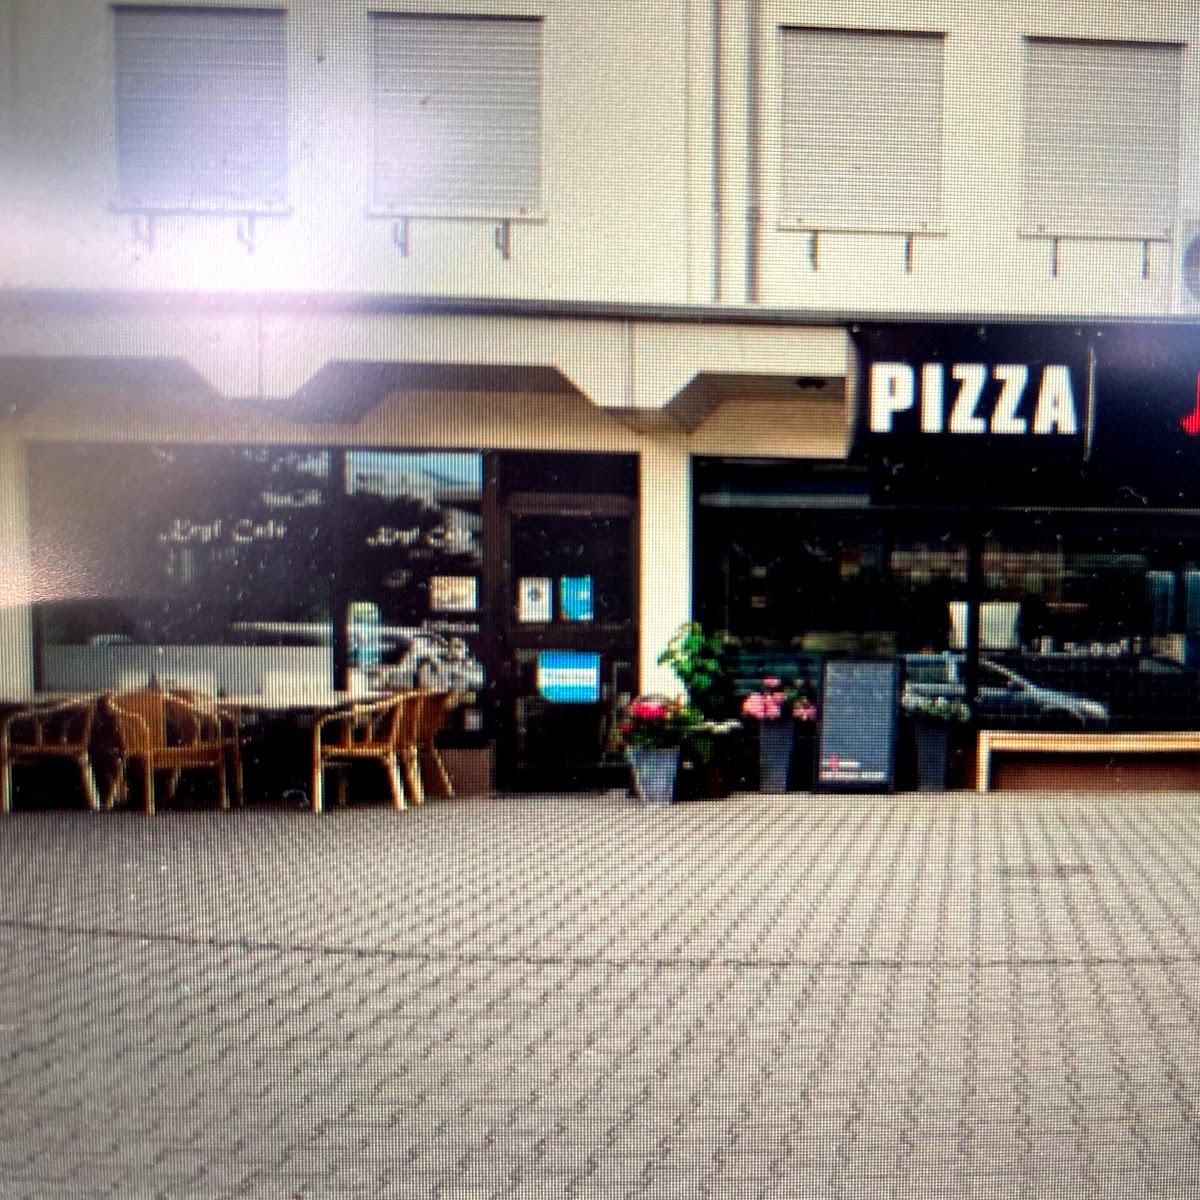 Restaurant "Pizza Joker" in Groß-Gerau